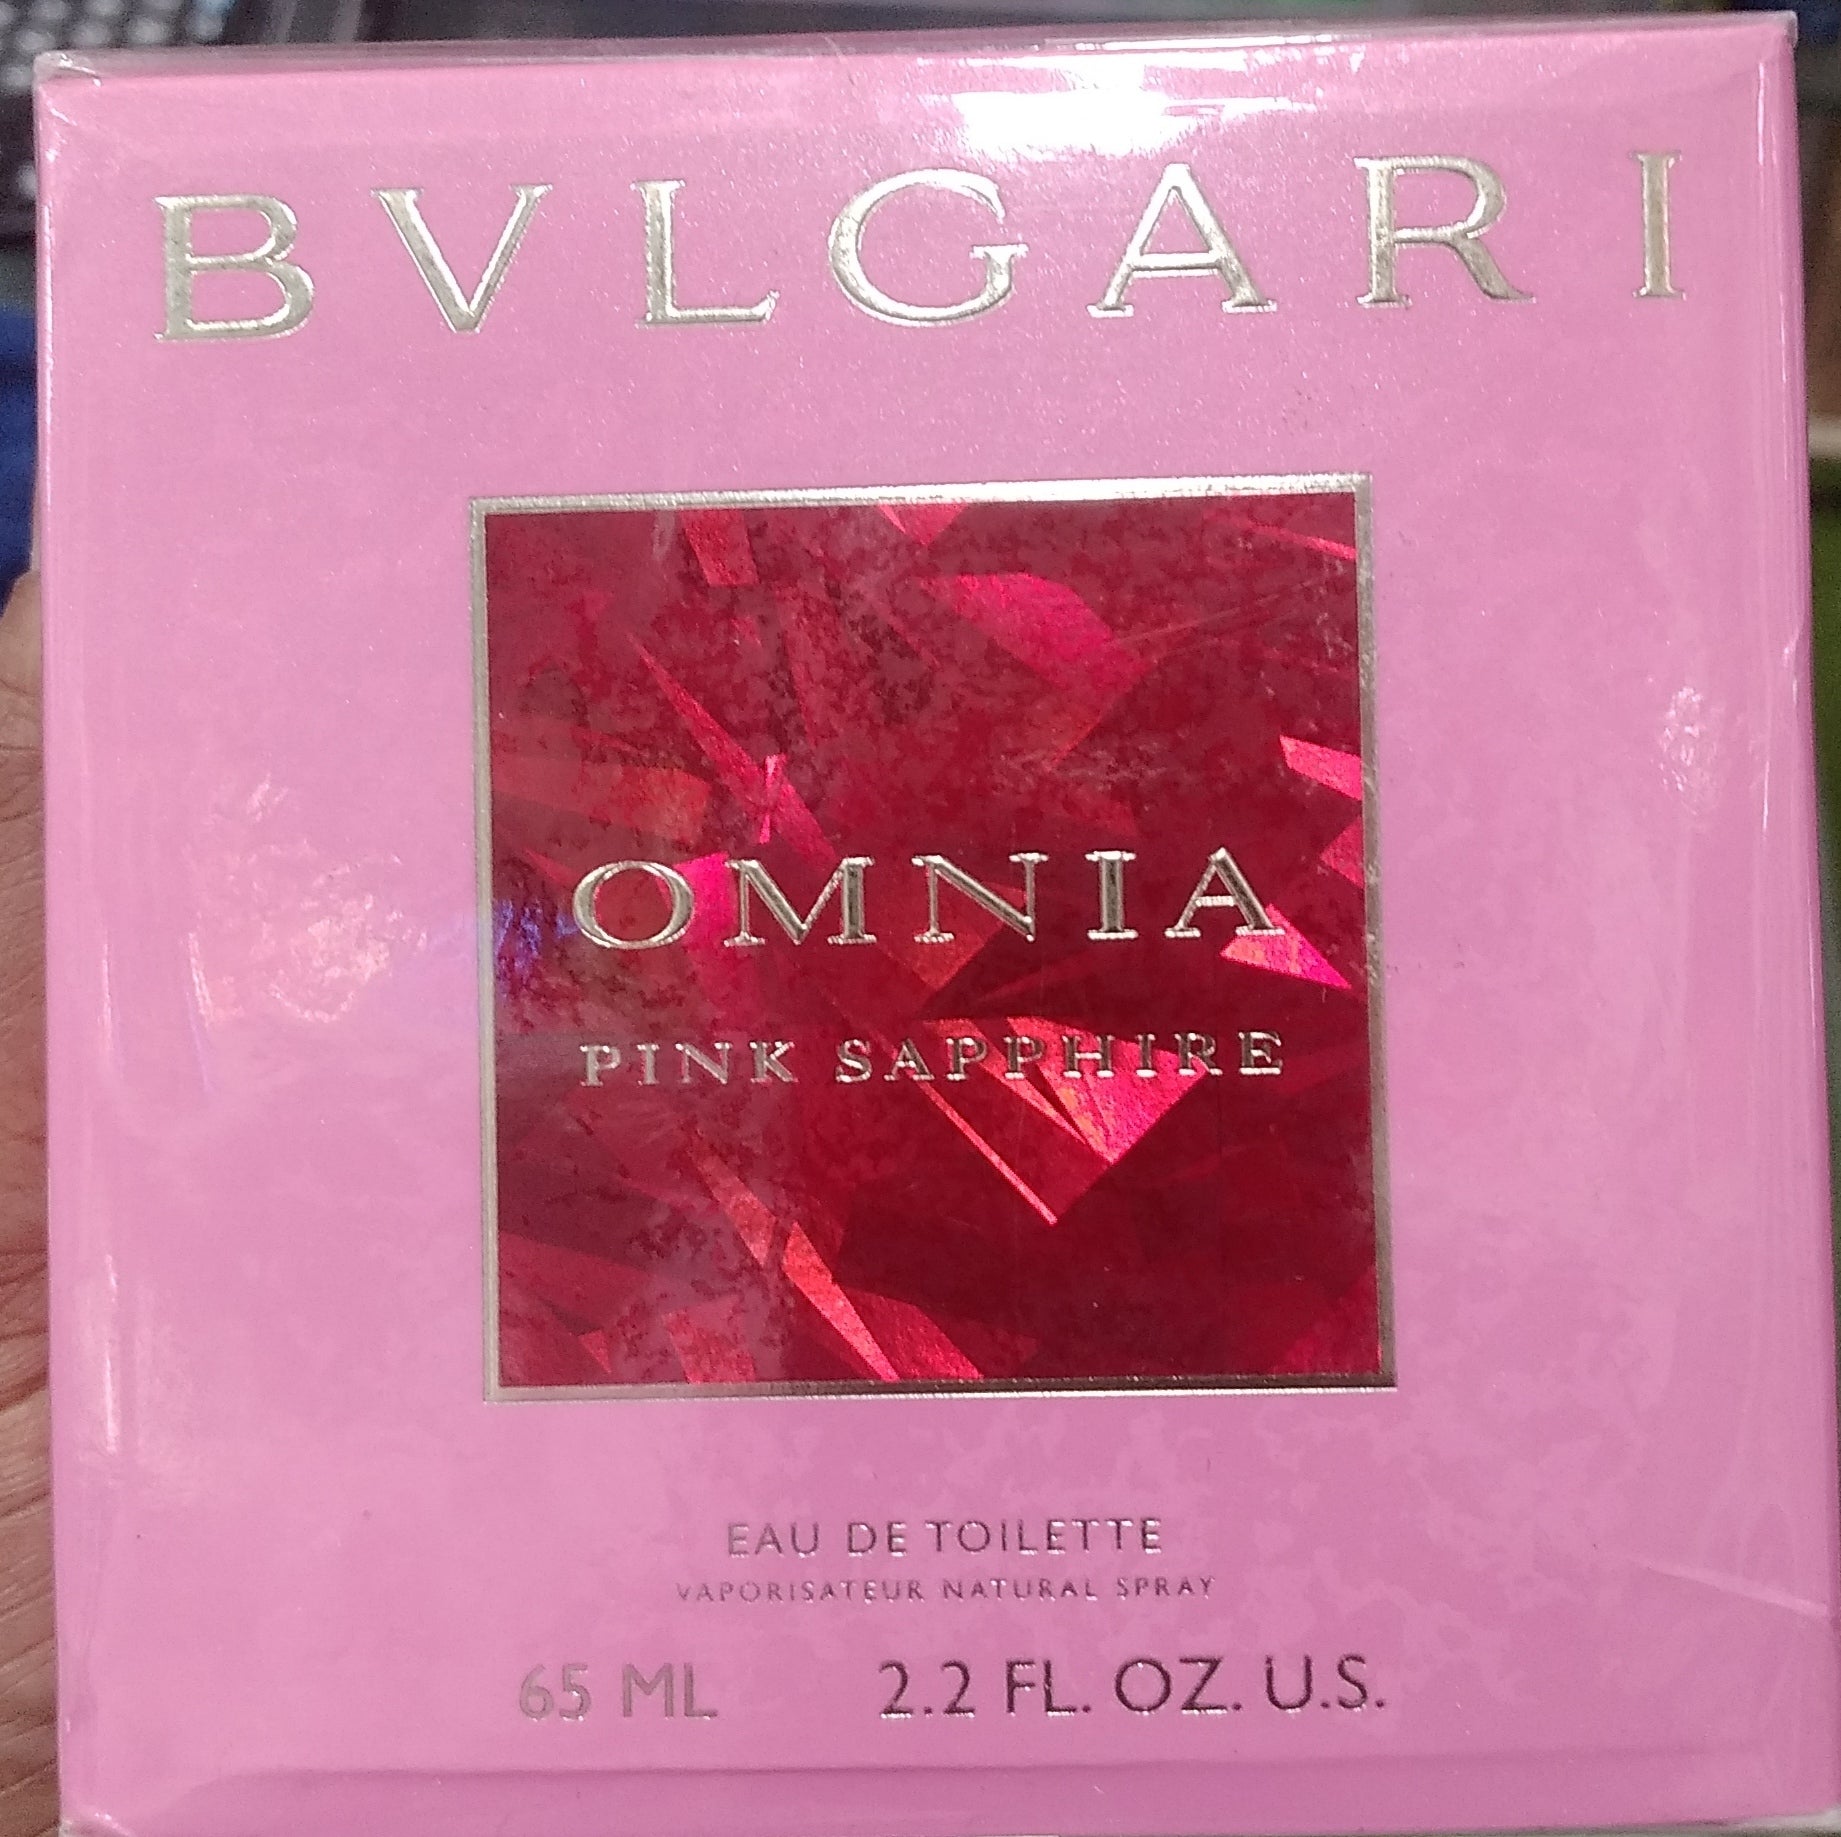 Bvlgari Omnia Pink Sapphire Eau de Toilette (65 ml) Bvlgari